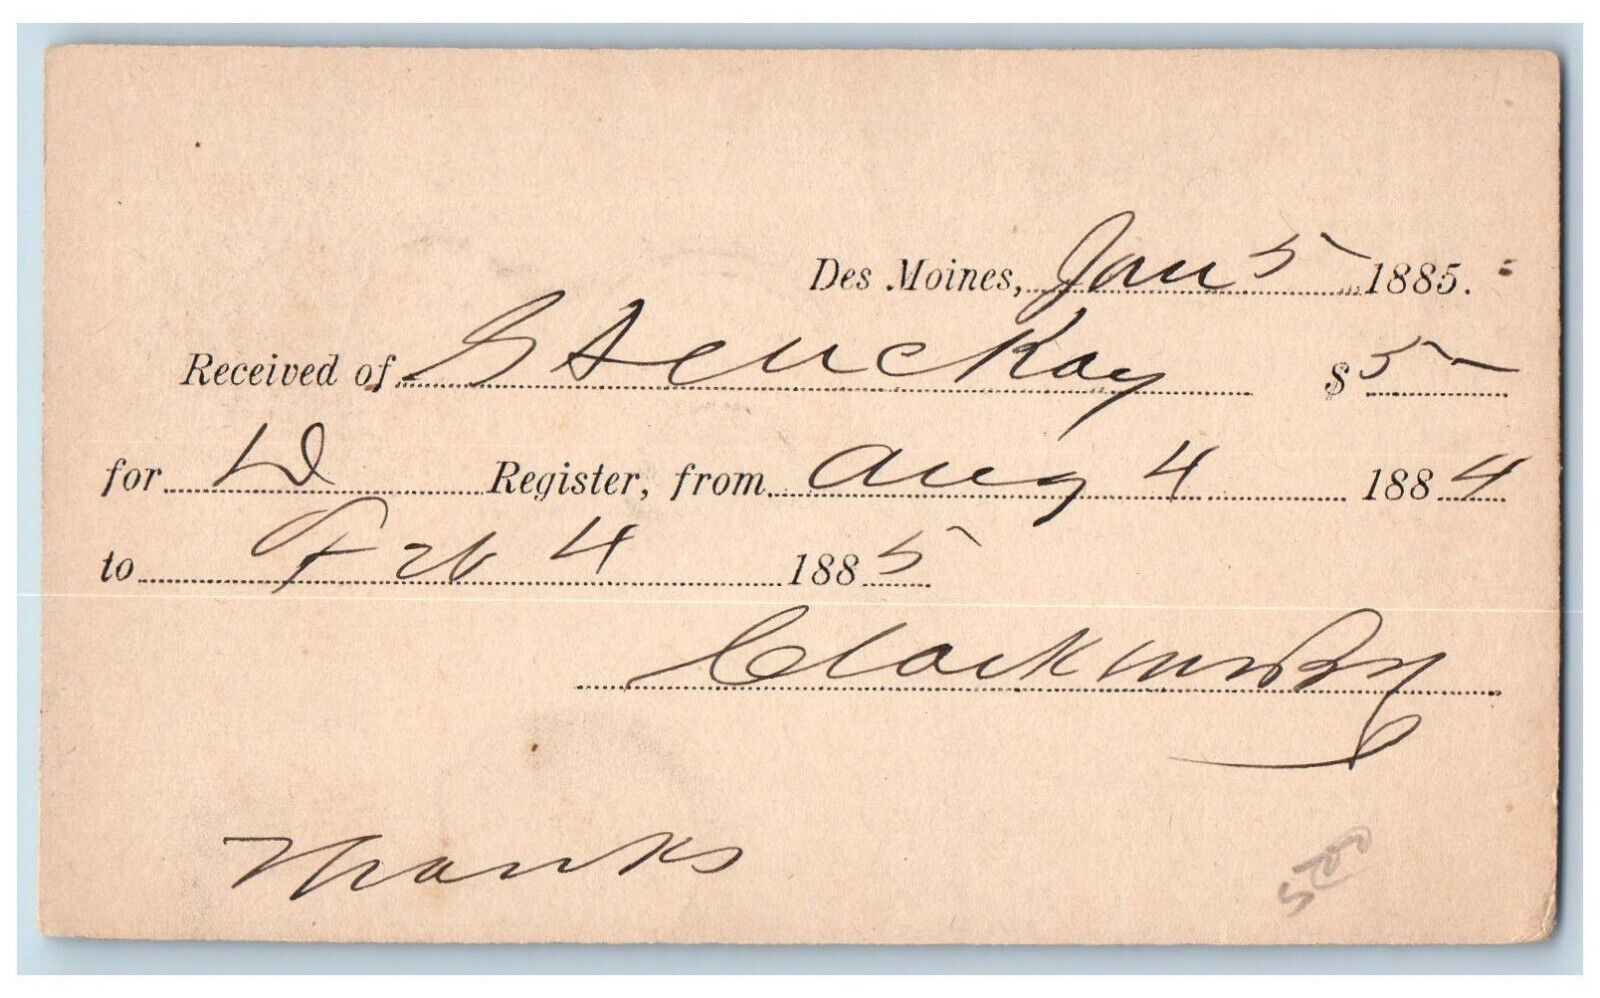 Des Moines Iowa IA Clarion IA Postal Card Received of Shuckay 1885 Antique